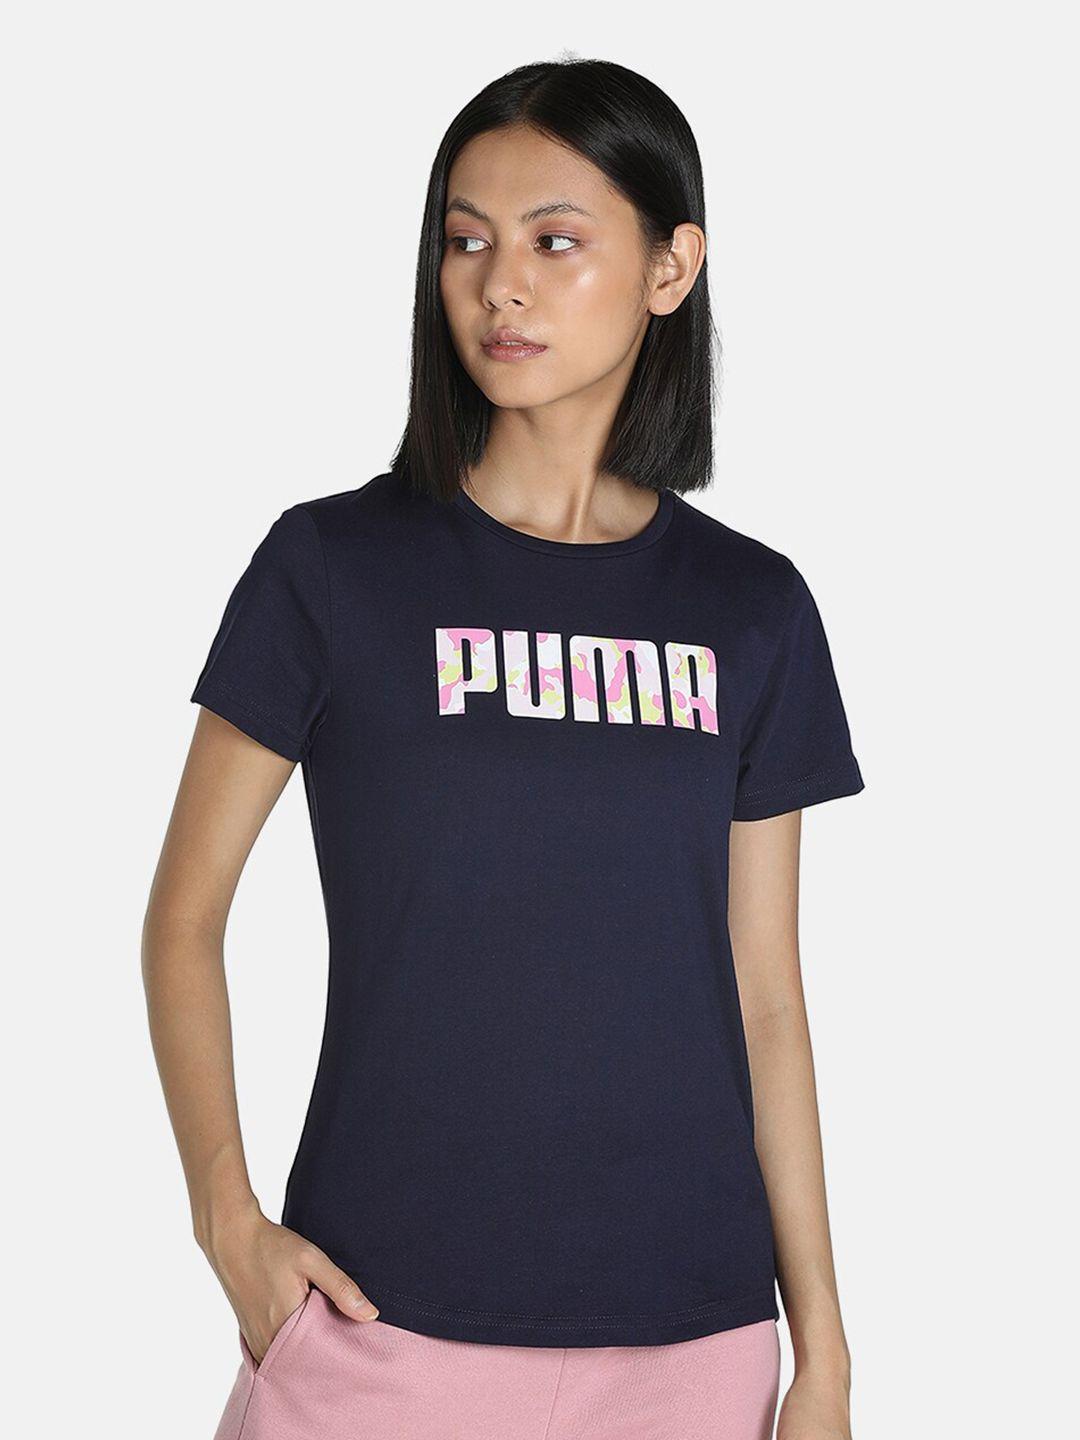 puma women navy blue & white brand logo printed regular fit cotton t-shirt